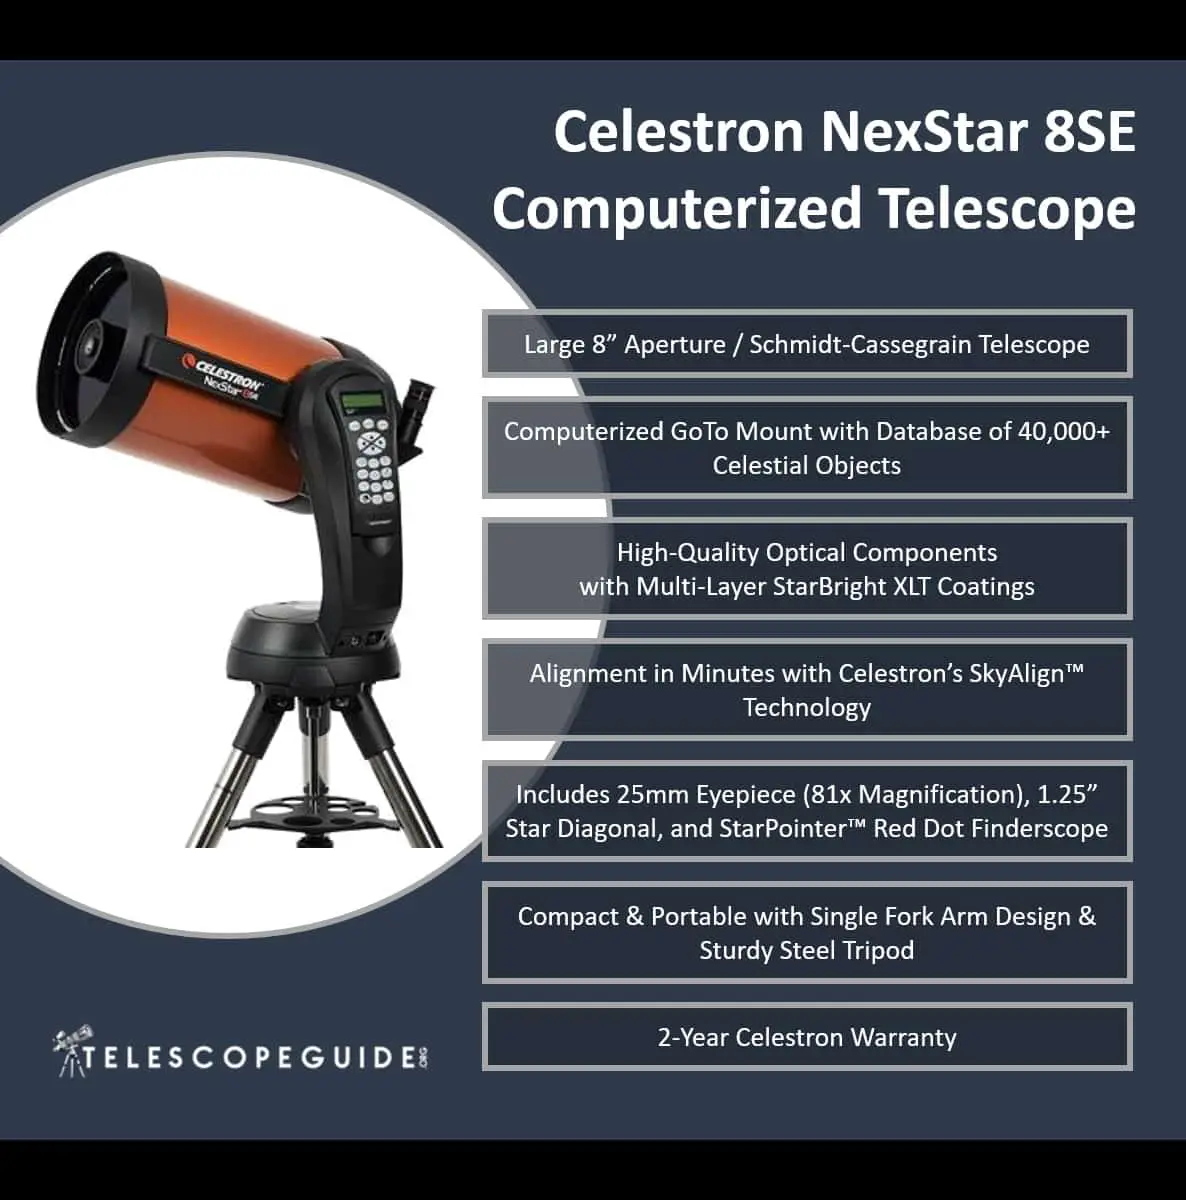 Celestron NexStar 8SE Computerized Telescope Highlights